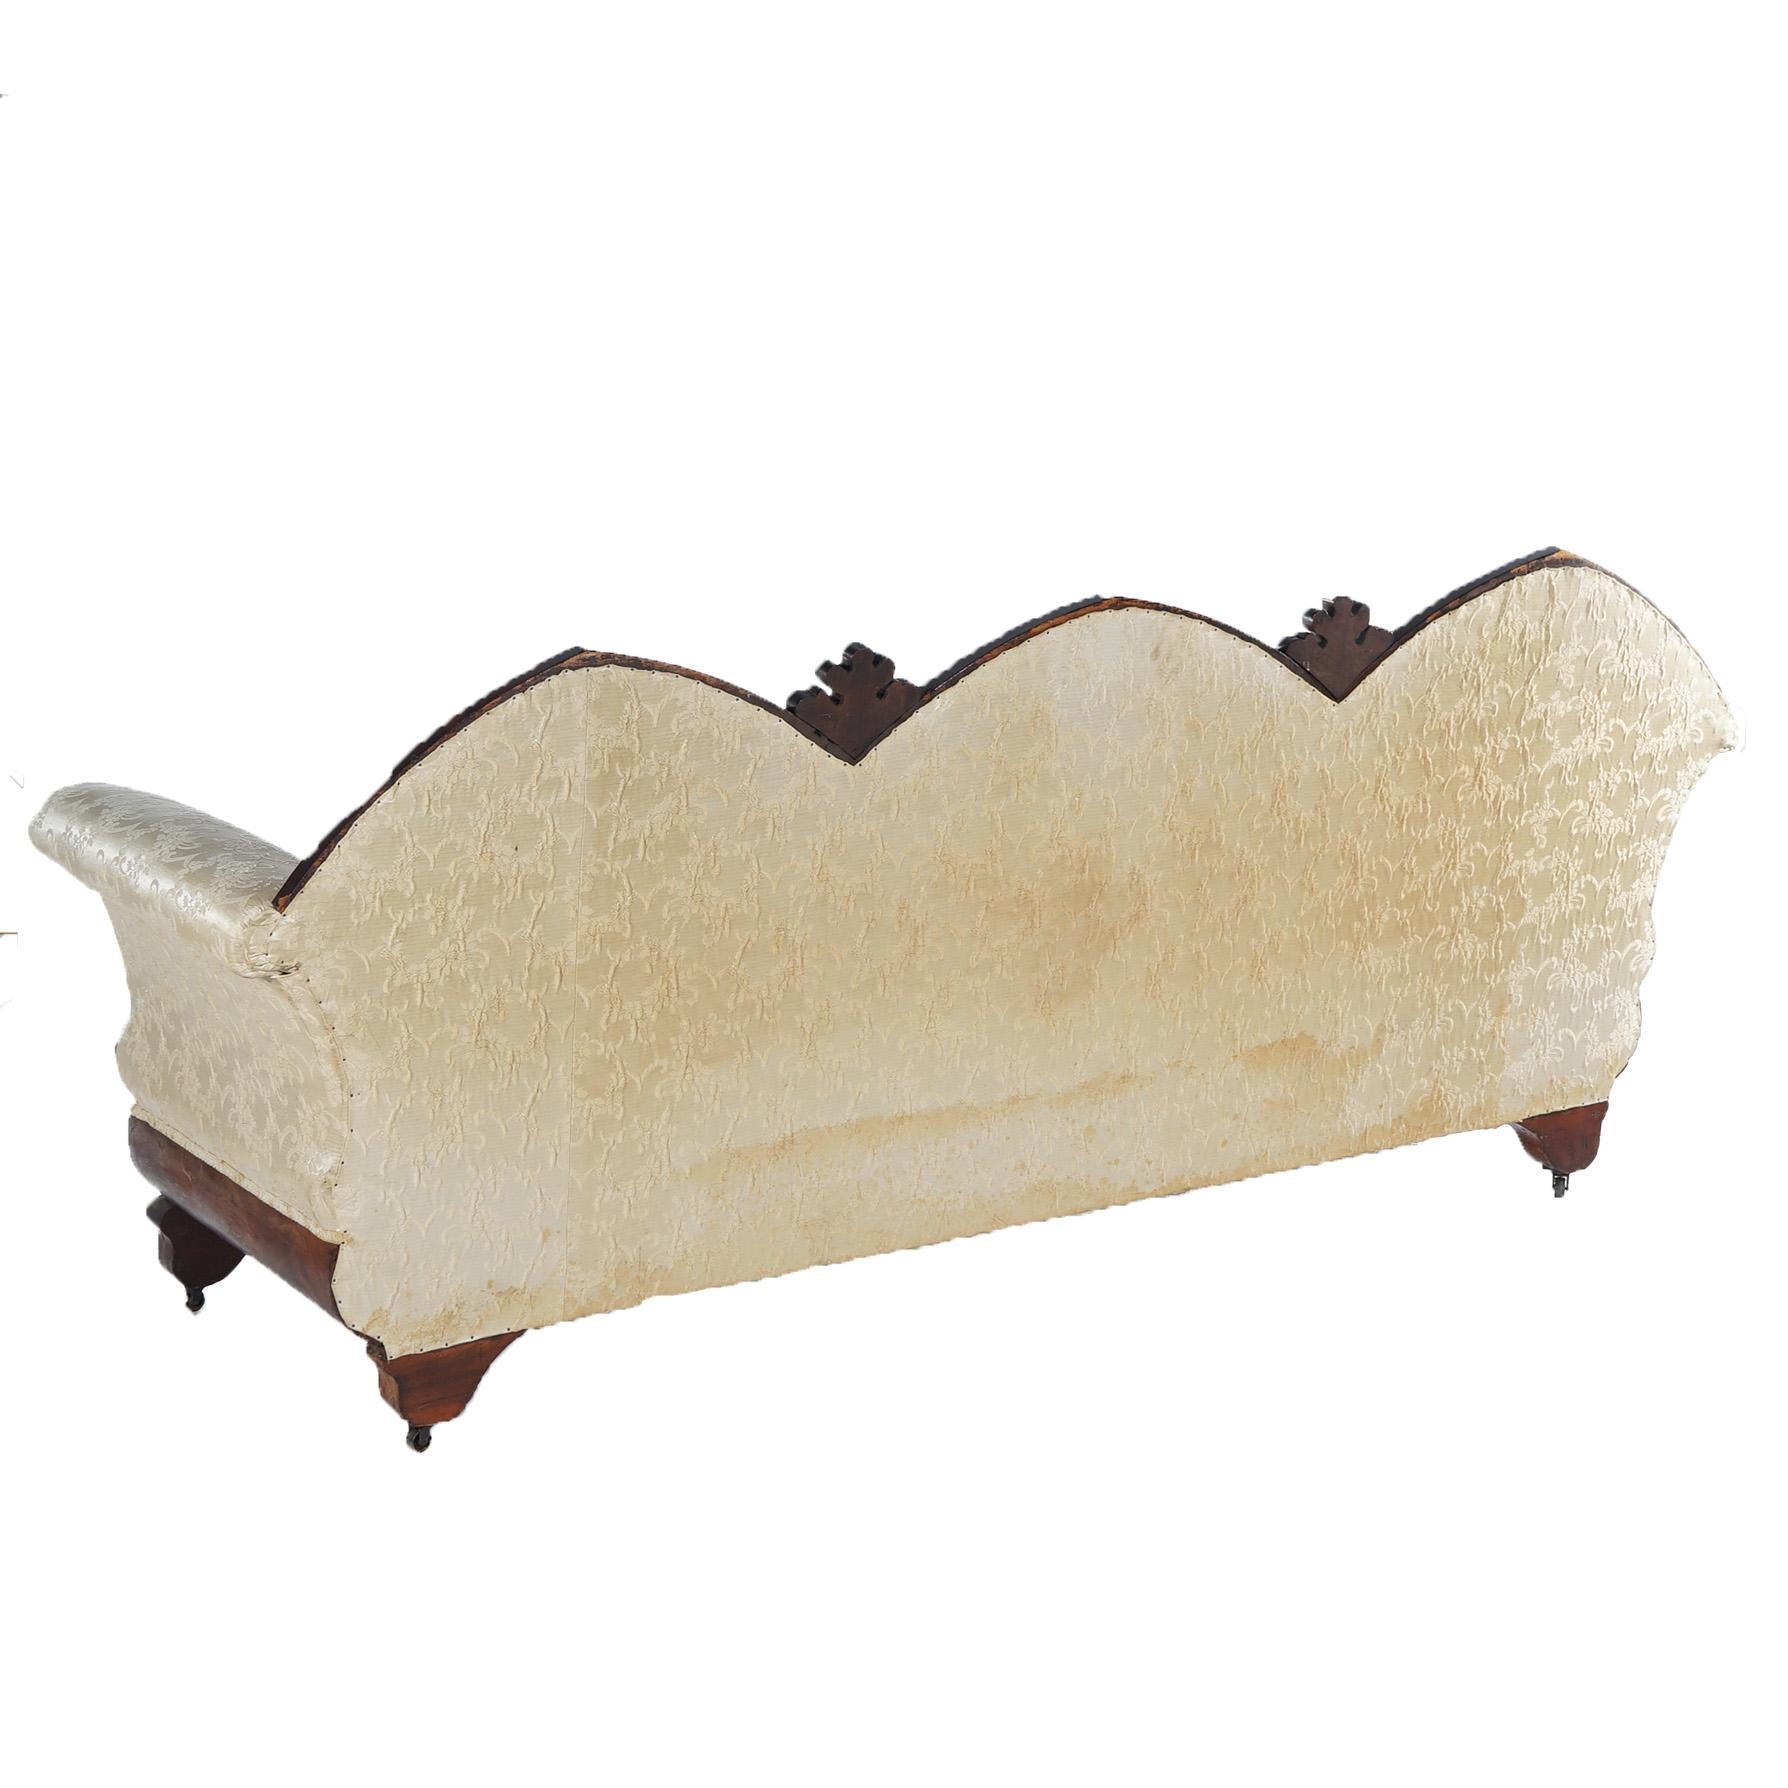 Antique Gothic Revival Classical Flame Mahogany Upholstered Sofa Circa 1850 4